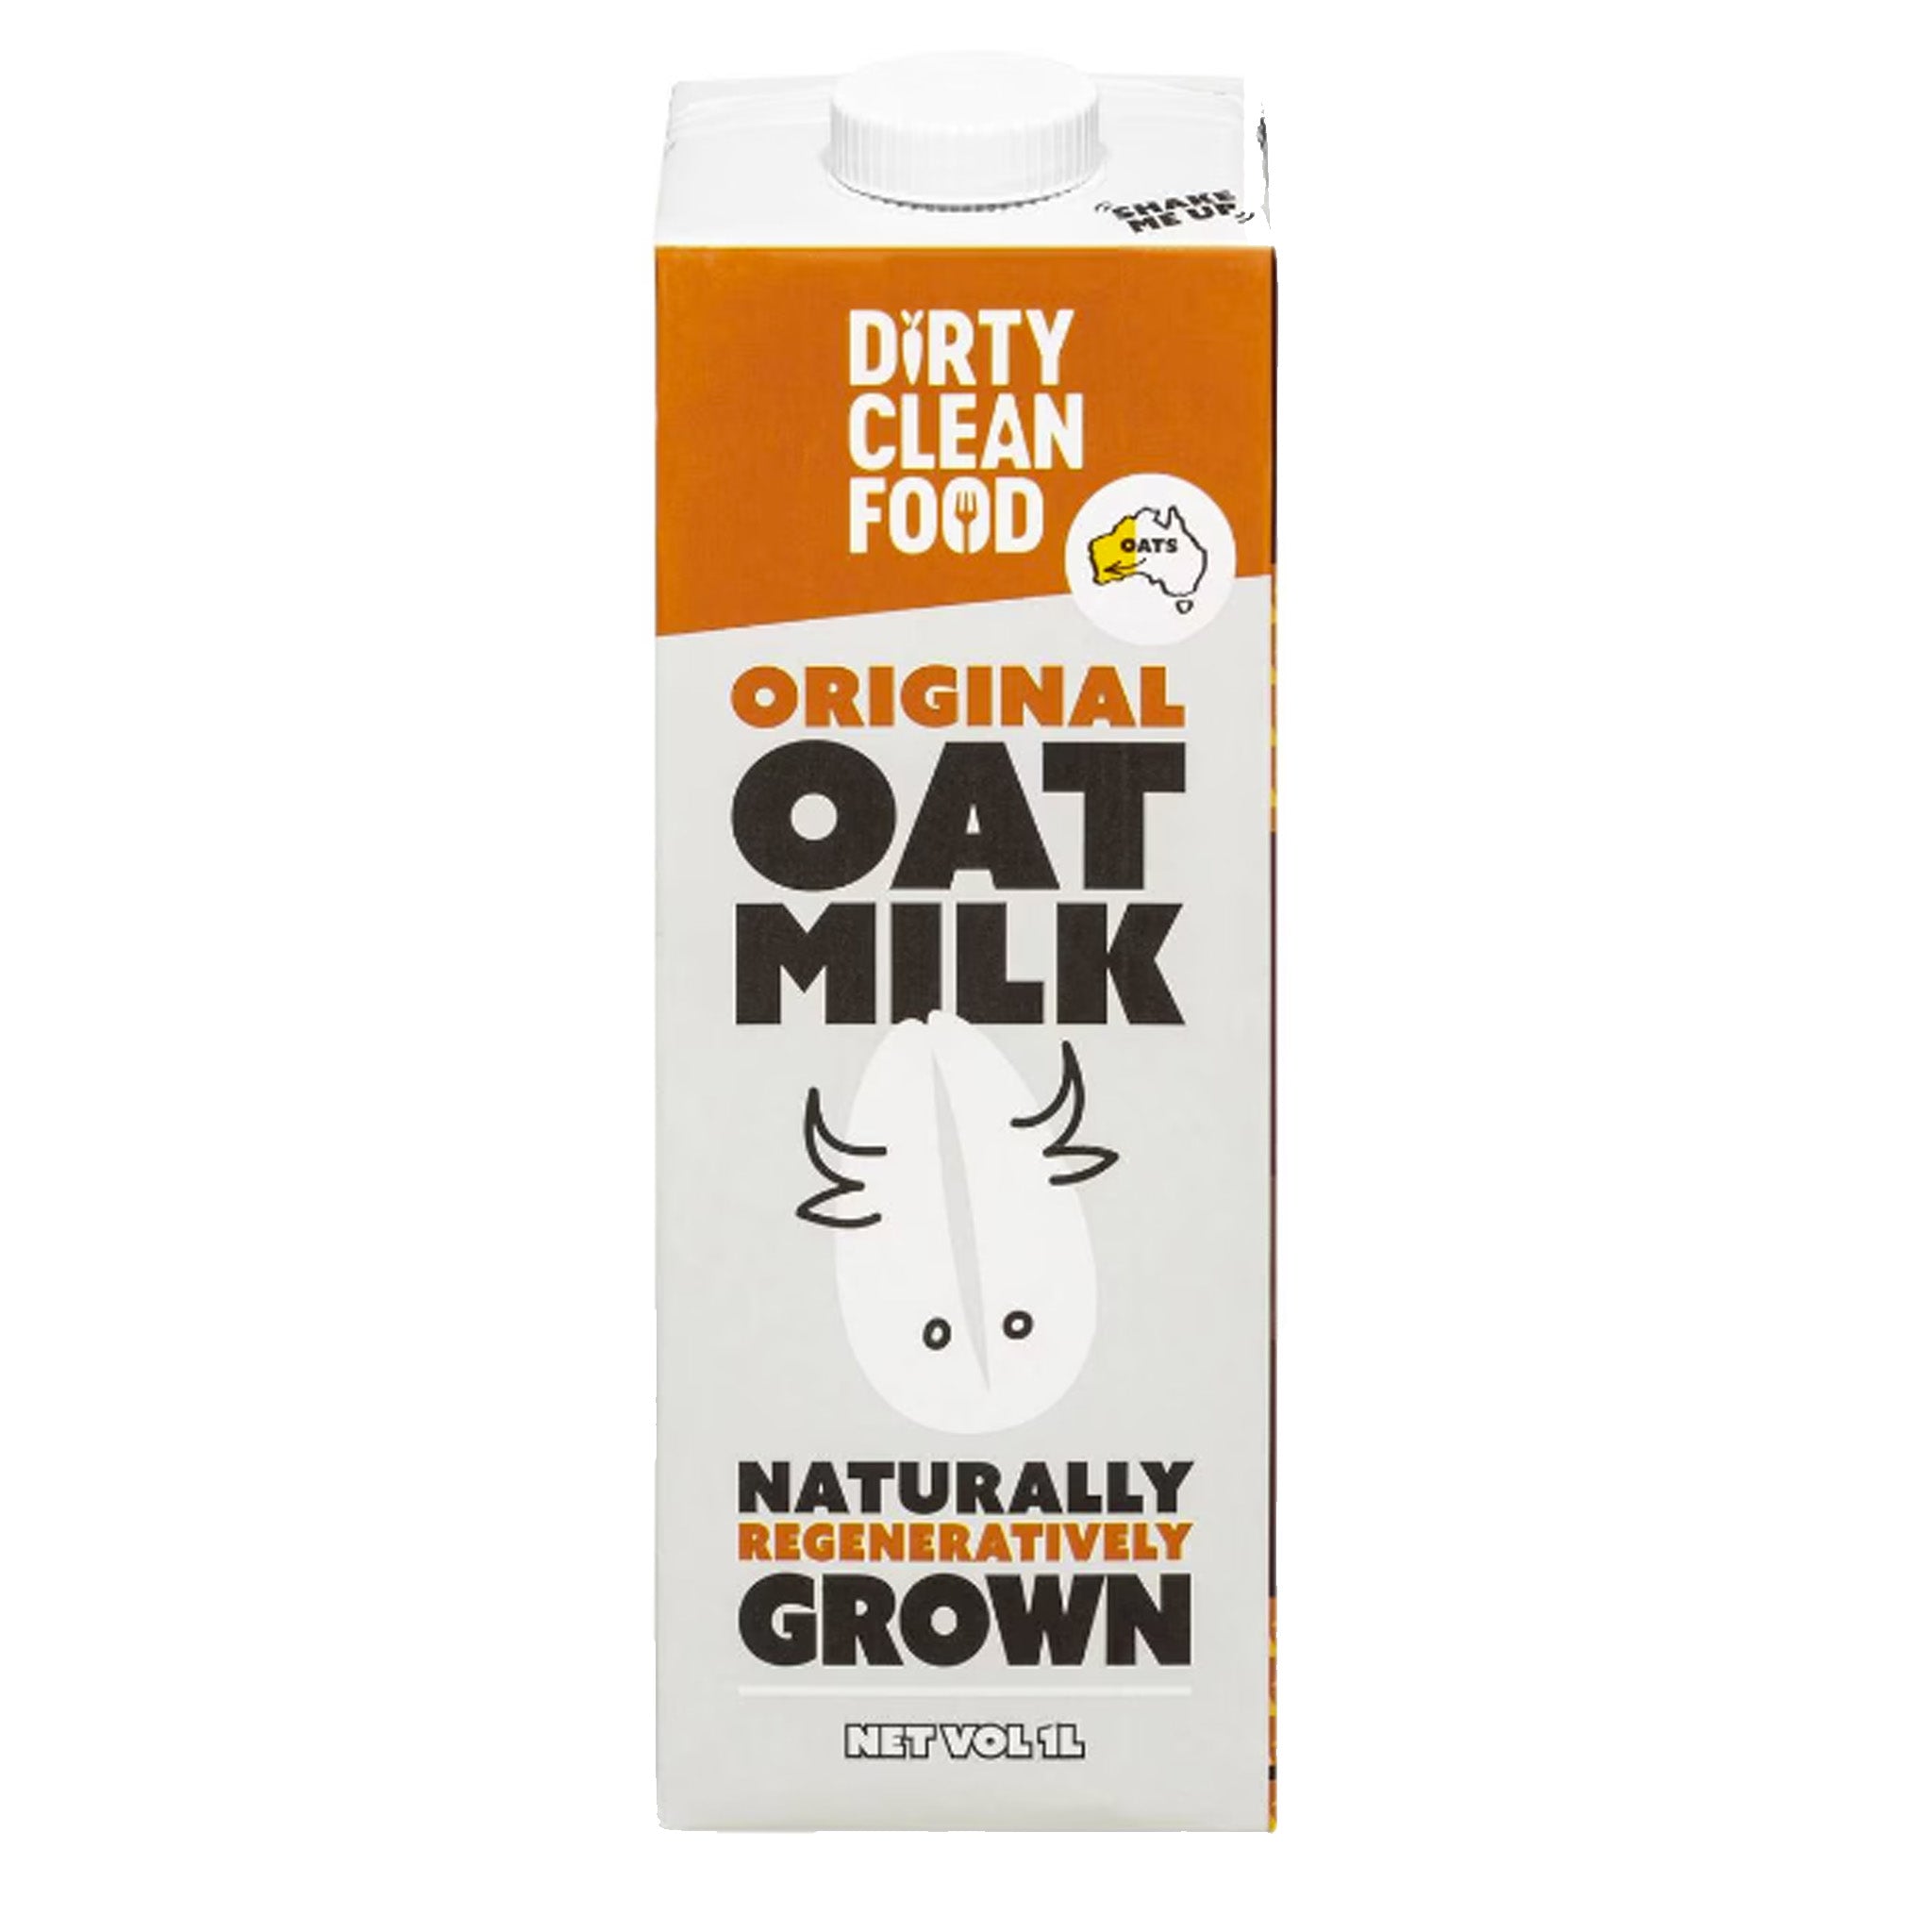 Dirt Clean Food Oat Milk Original 6 x 1L